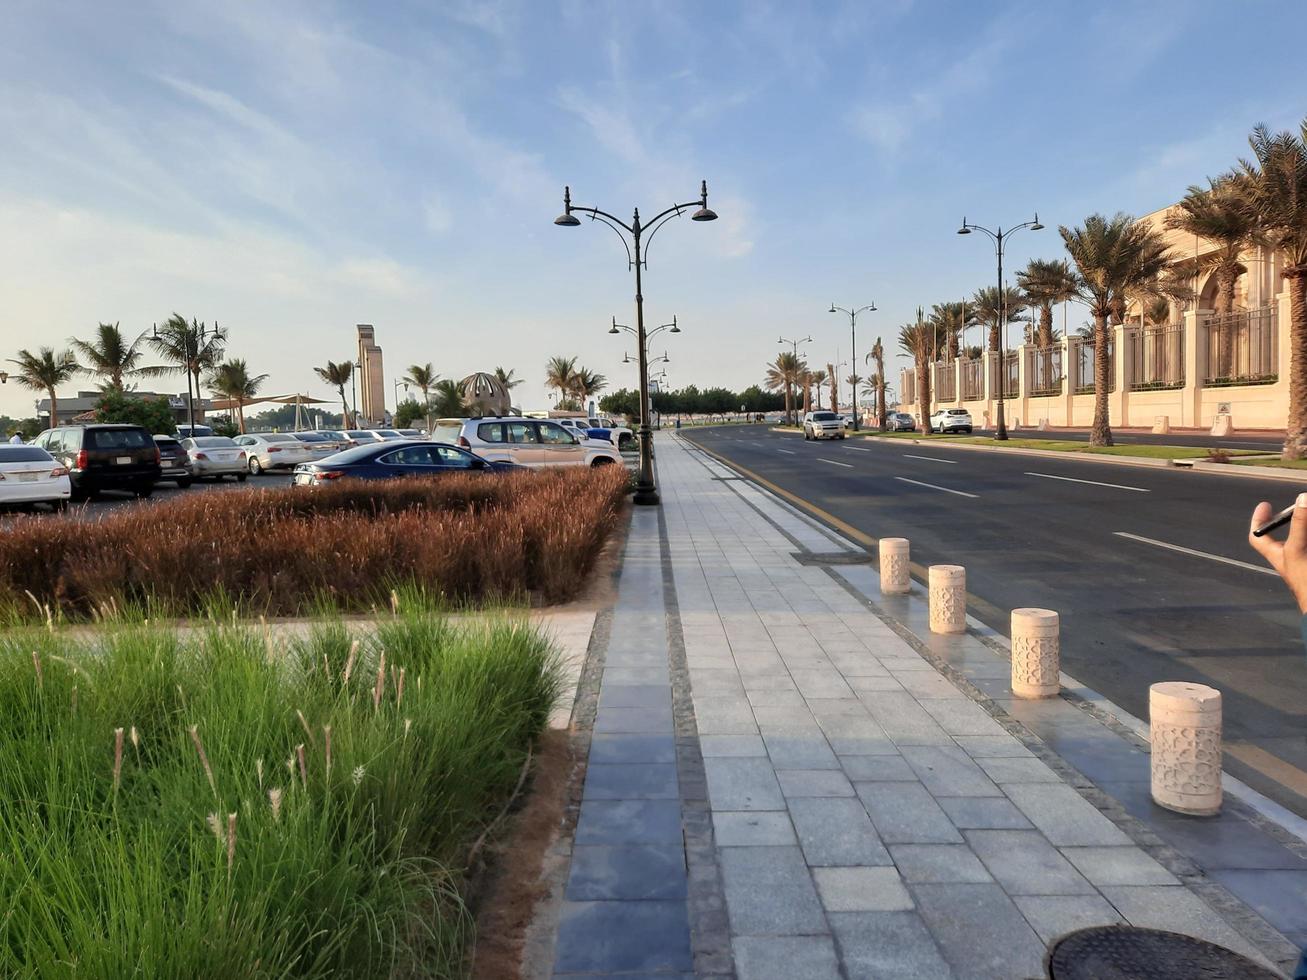 jeddah, Arabia arabia, nov 2022 - bellissimo Visualizza di jeddah corniche strada nel jeddah, Arabia arabia a sera. foto